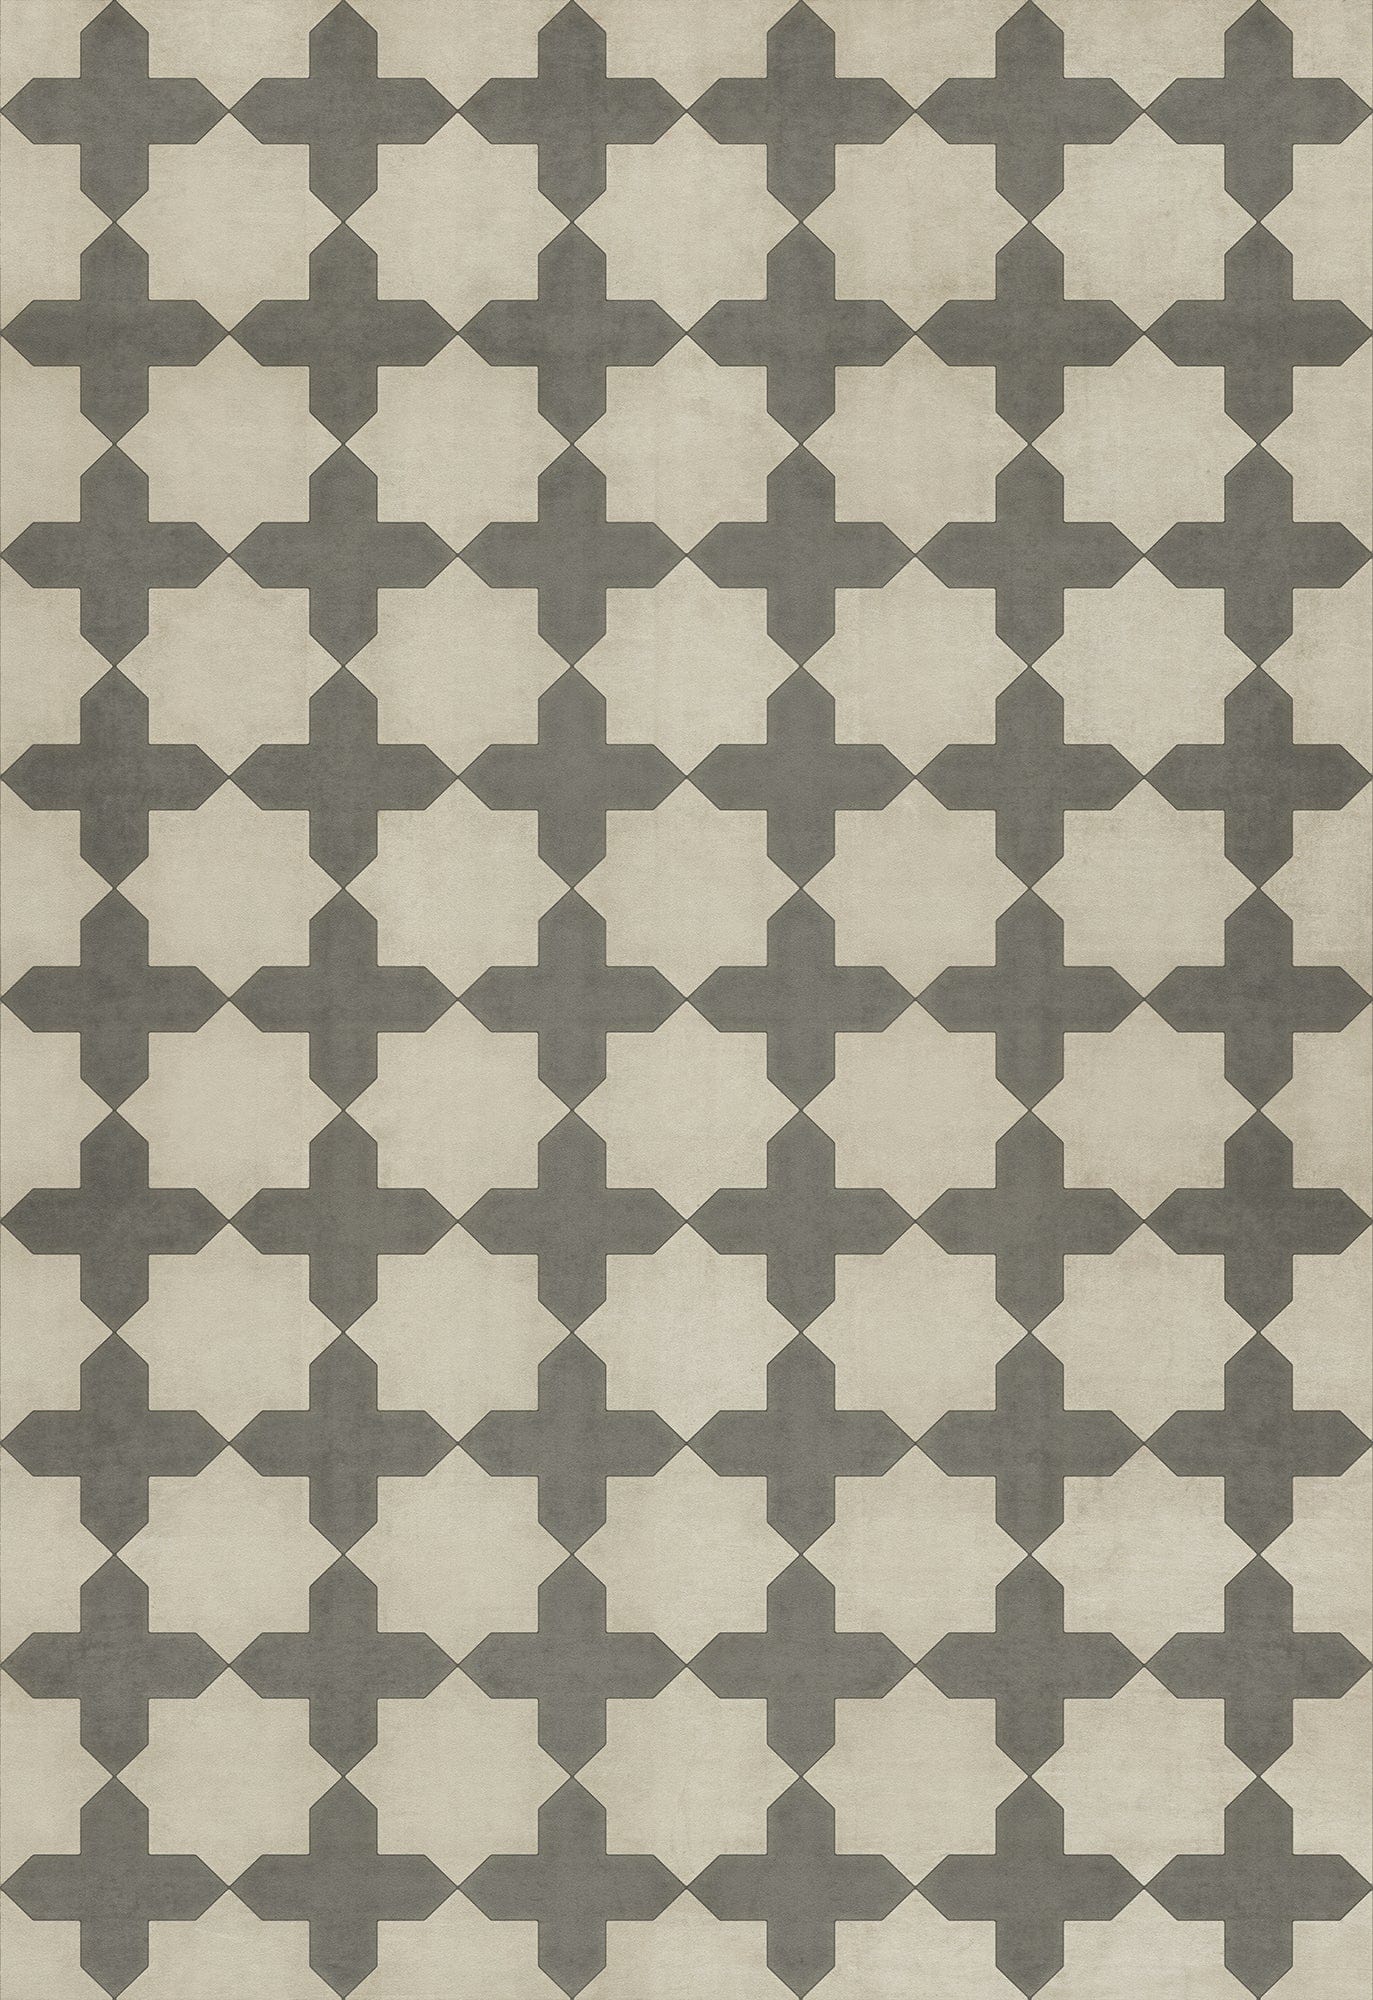 Pattern 23